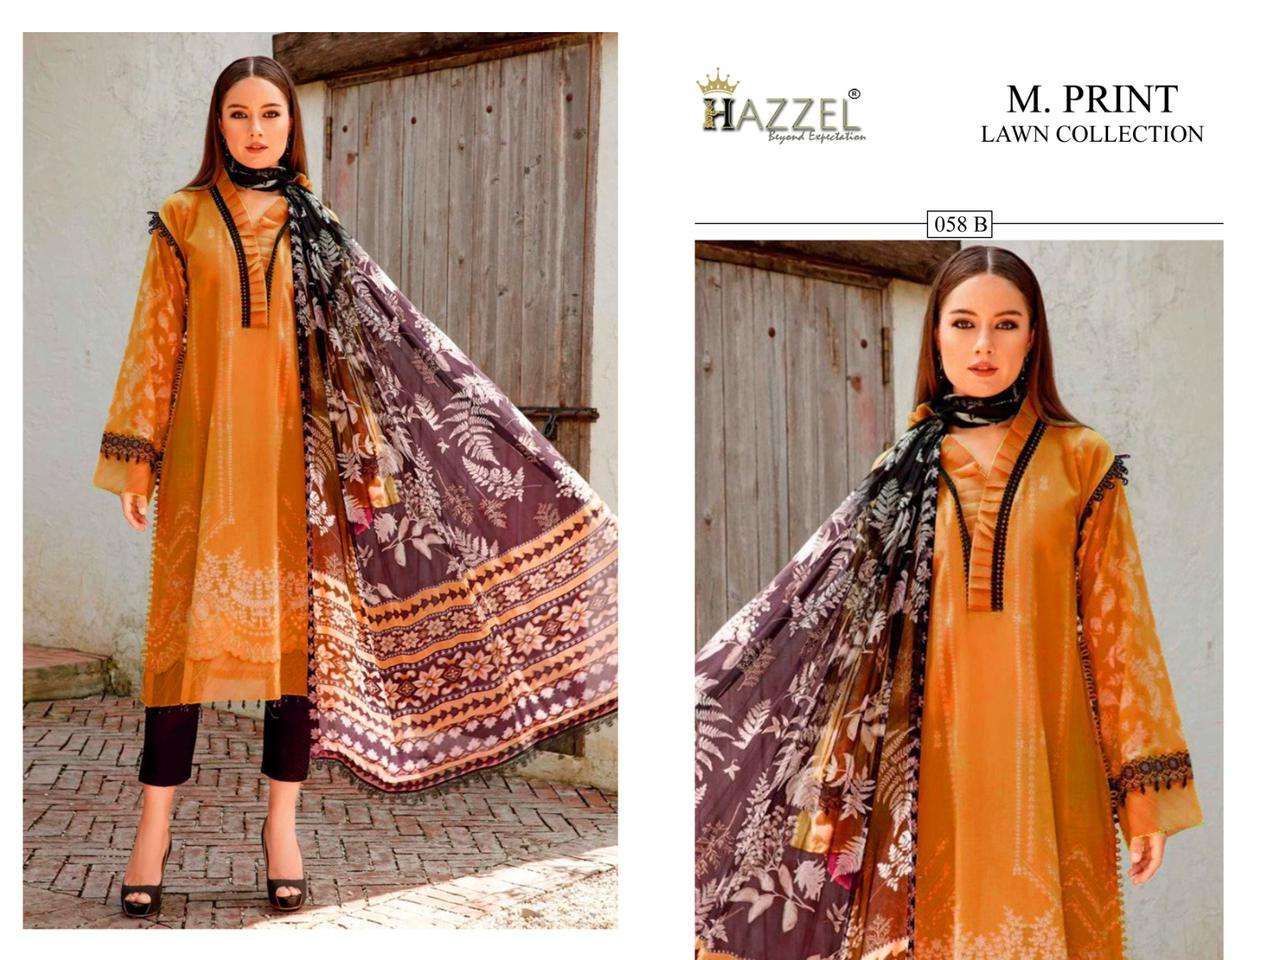 Hazzel M Print 058 Chiffon Dupatta Pakistani Suits Wholesale catalog